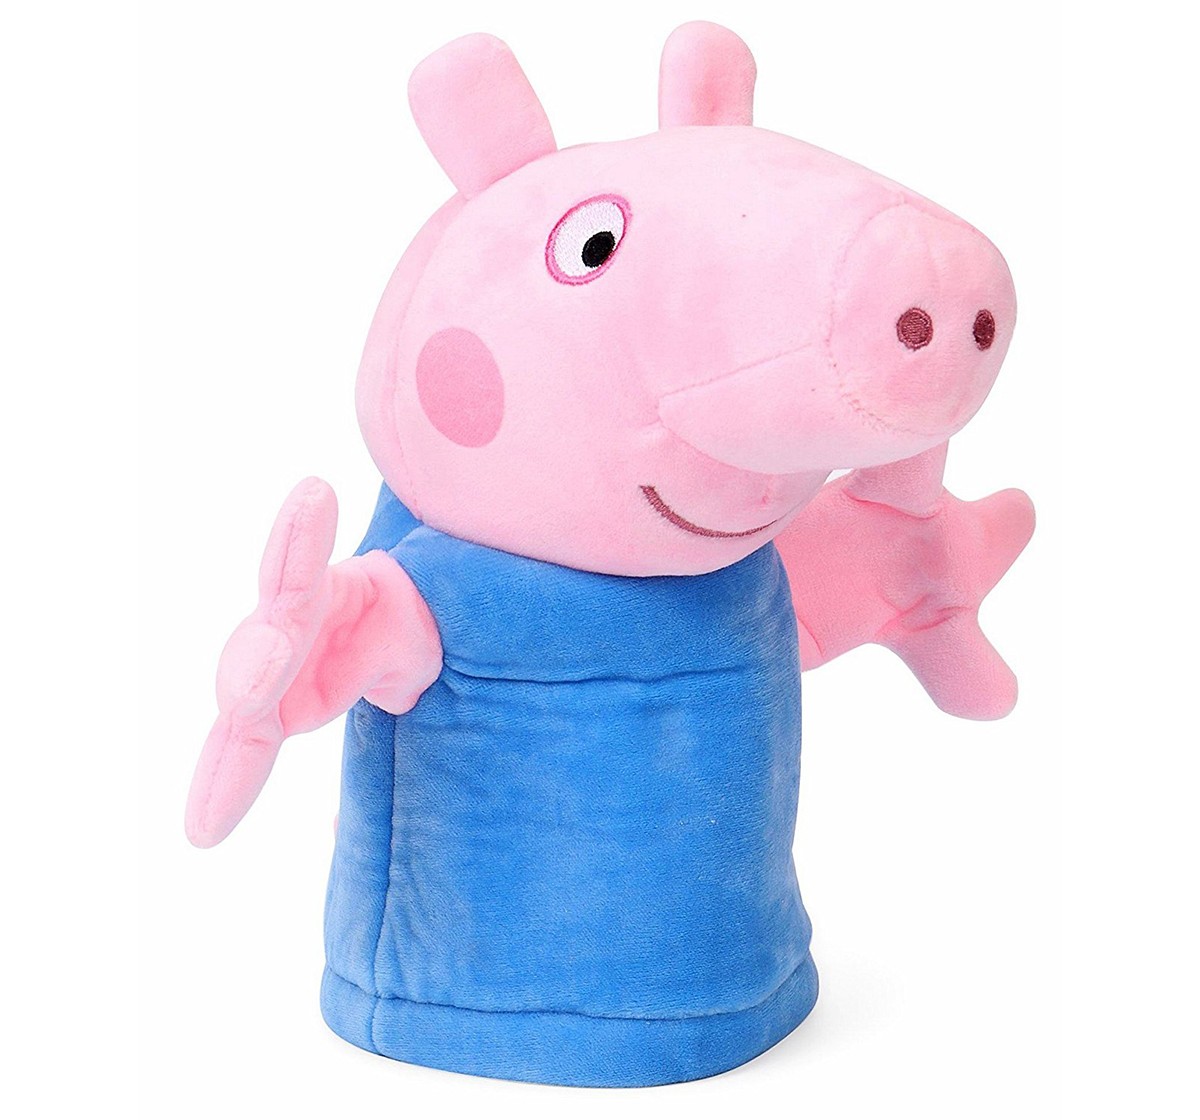 Peppa Pig George 26 Cm Soft Toy for Kids age 3Y+ (Blue)